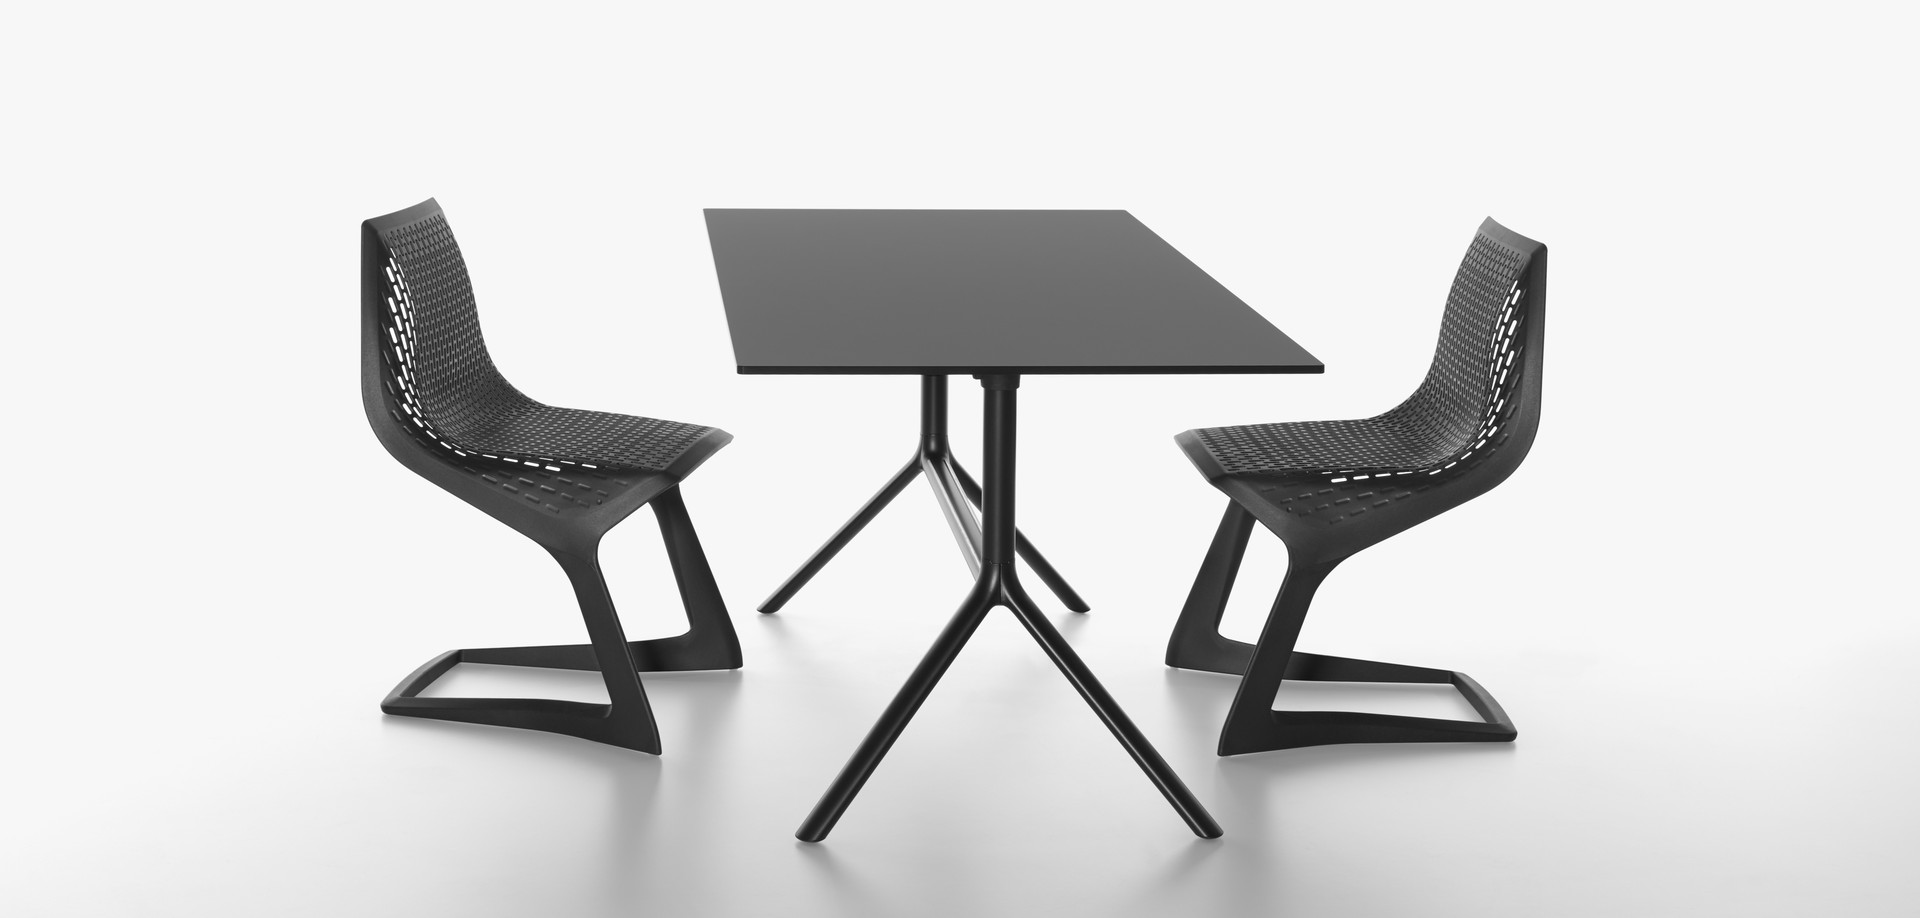 Plank - MYTO chair, black. MIURA table, black.